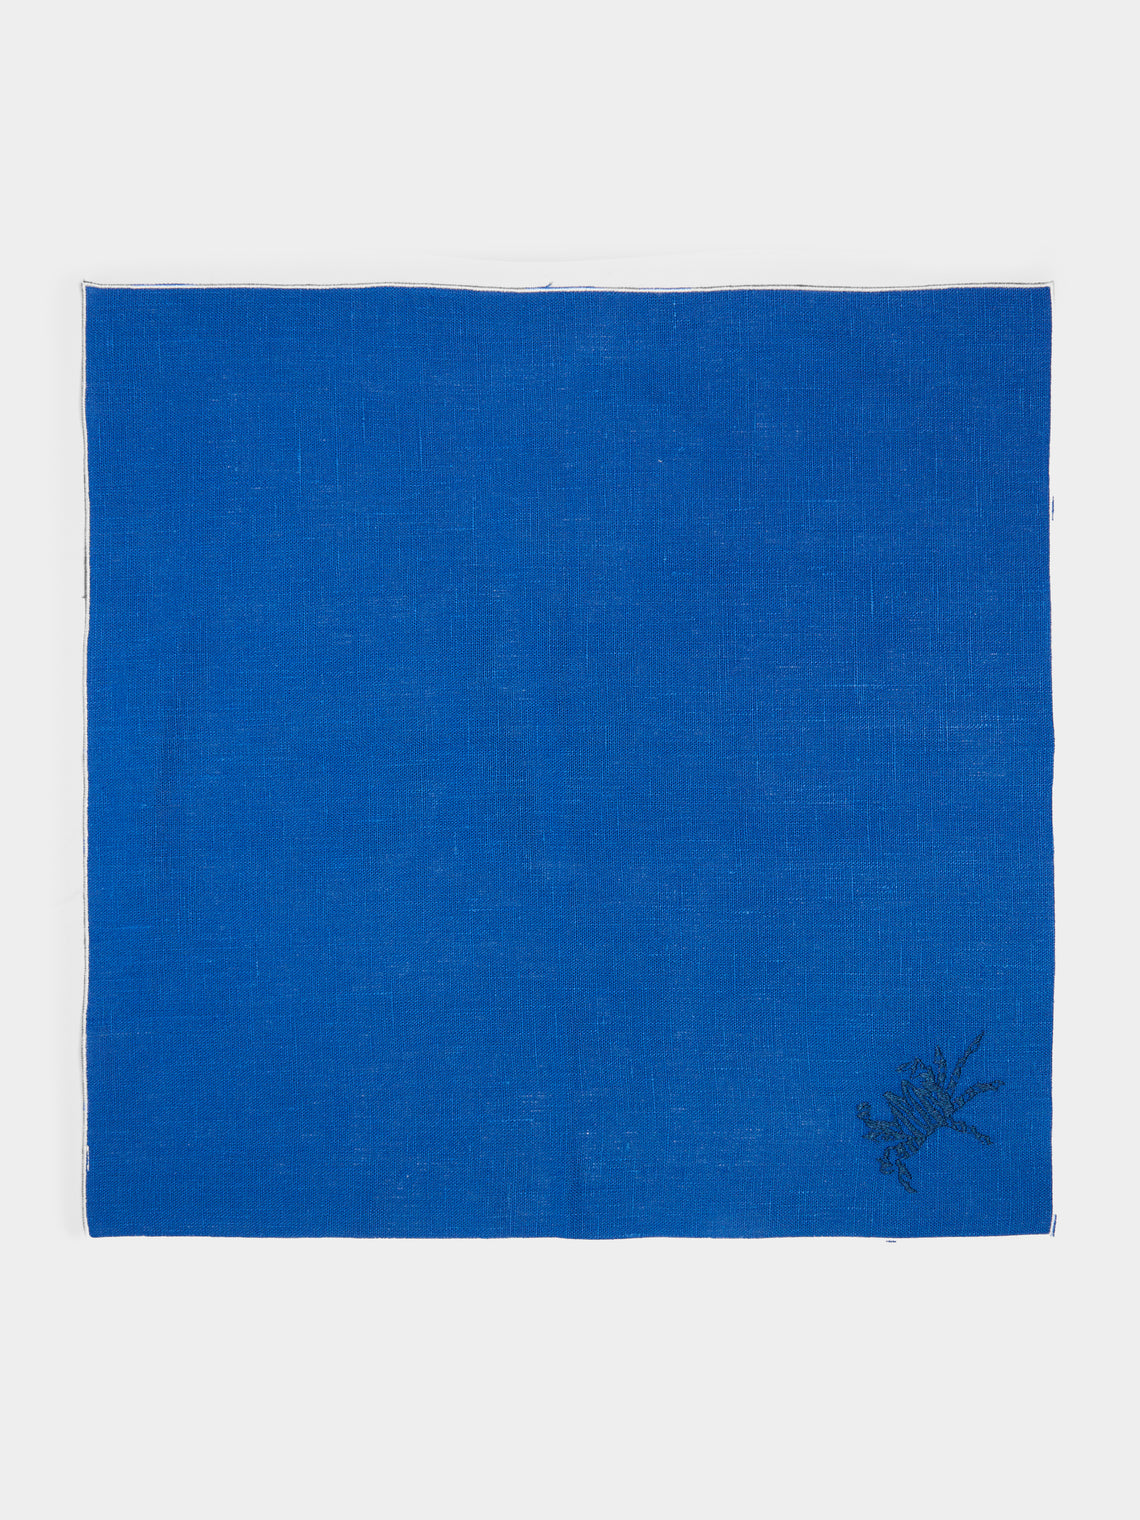 La Gallina Matta - Crabs Embroidered Linen Napkins (Set of 4) - Blue - ABASK